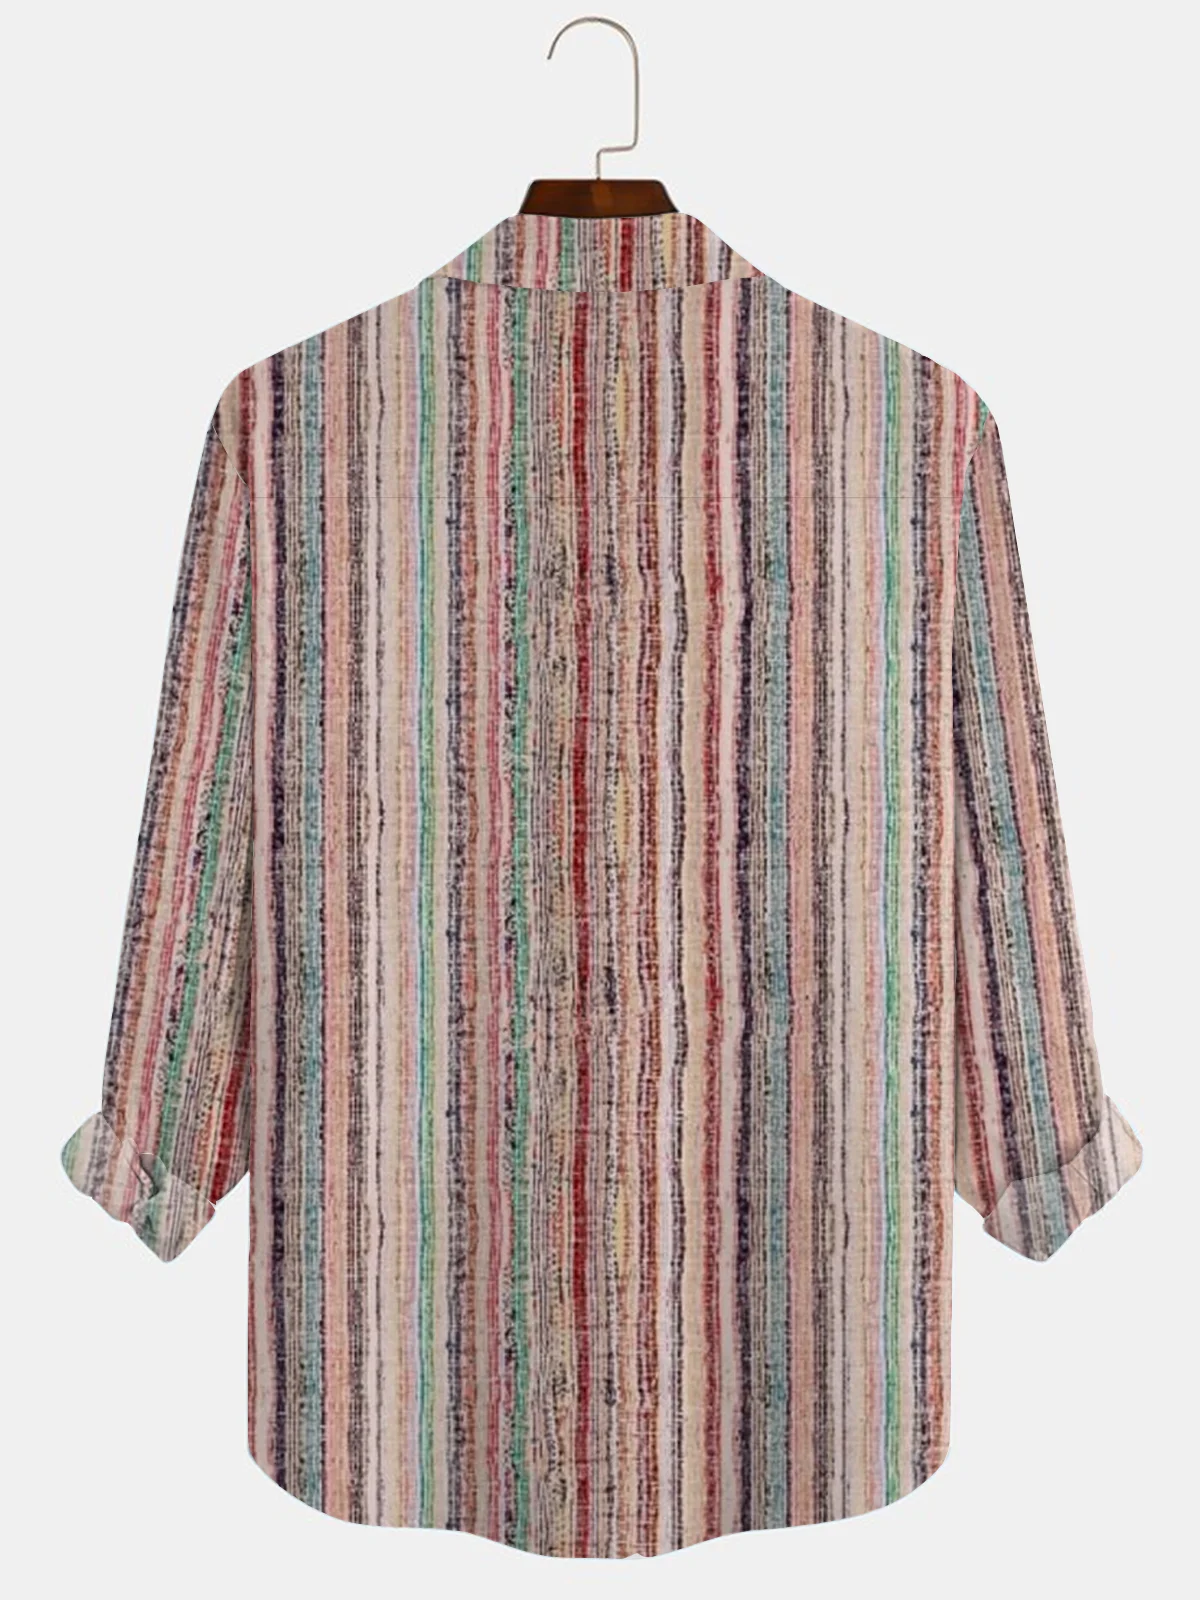 Royaura textured geometric striped oversized stretch men's button-pocket shirt